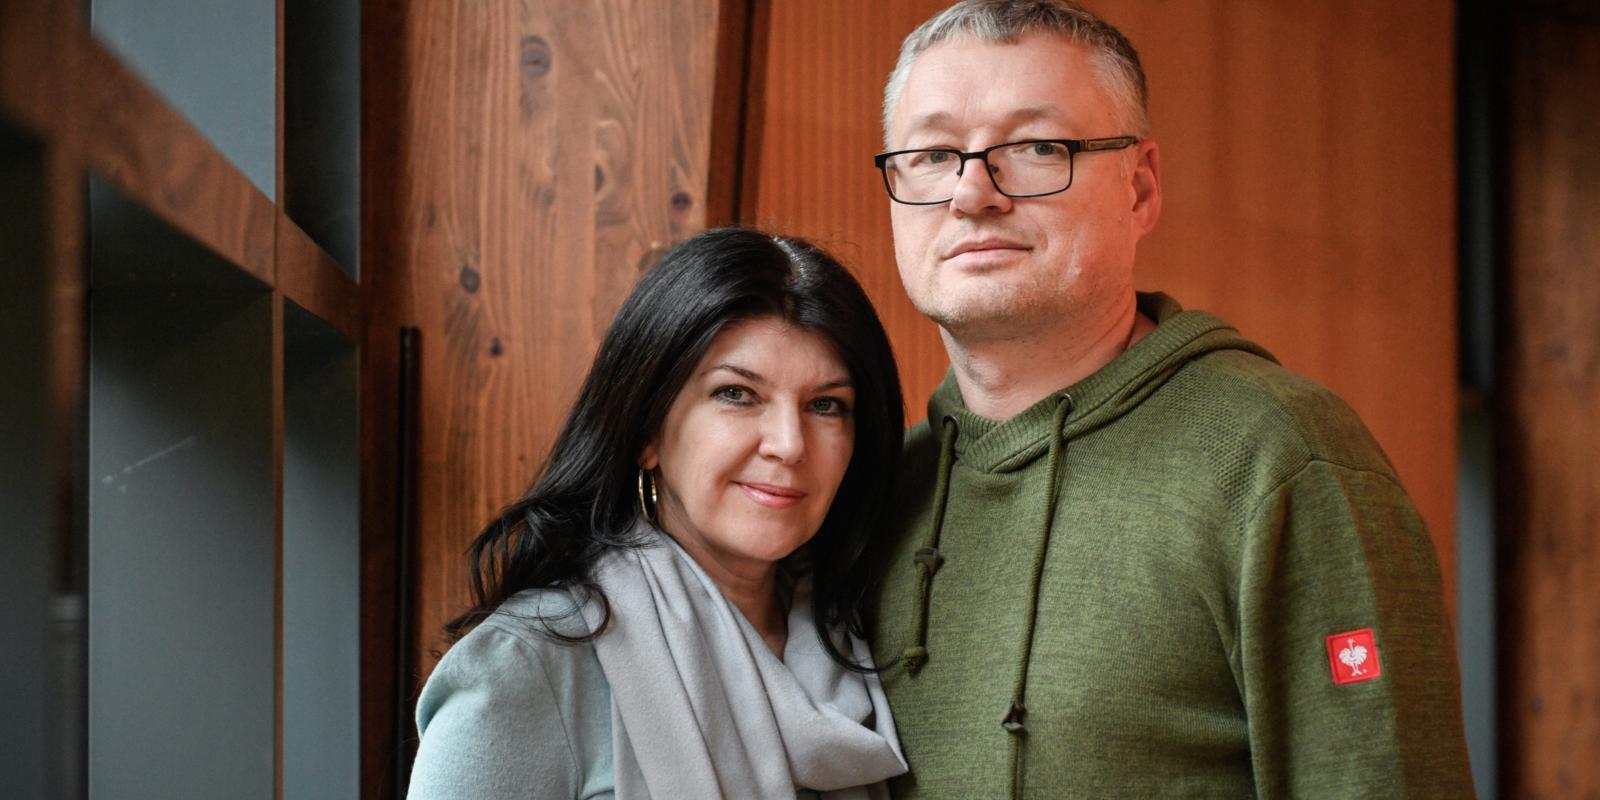 Natalia, Ehefrau, und Igor Guseev, Hausmeister am Gymnasium Aloisiuskolleg in Bonn, am 6. Dezember 2022.